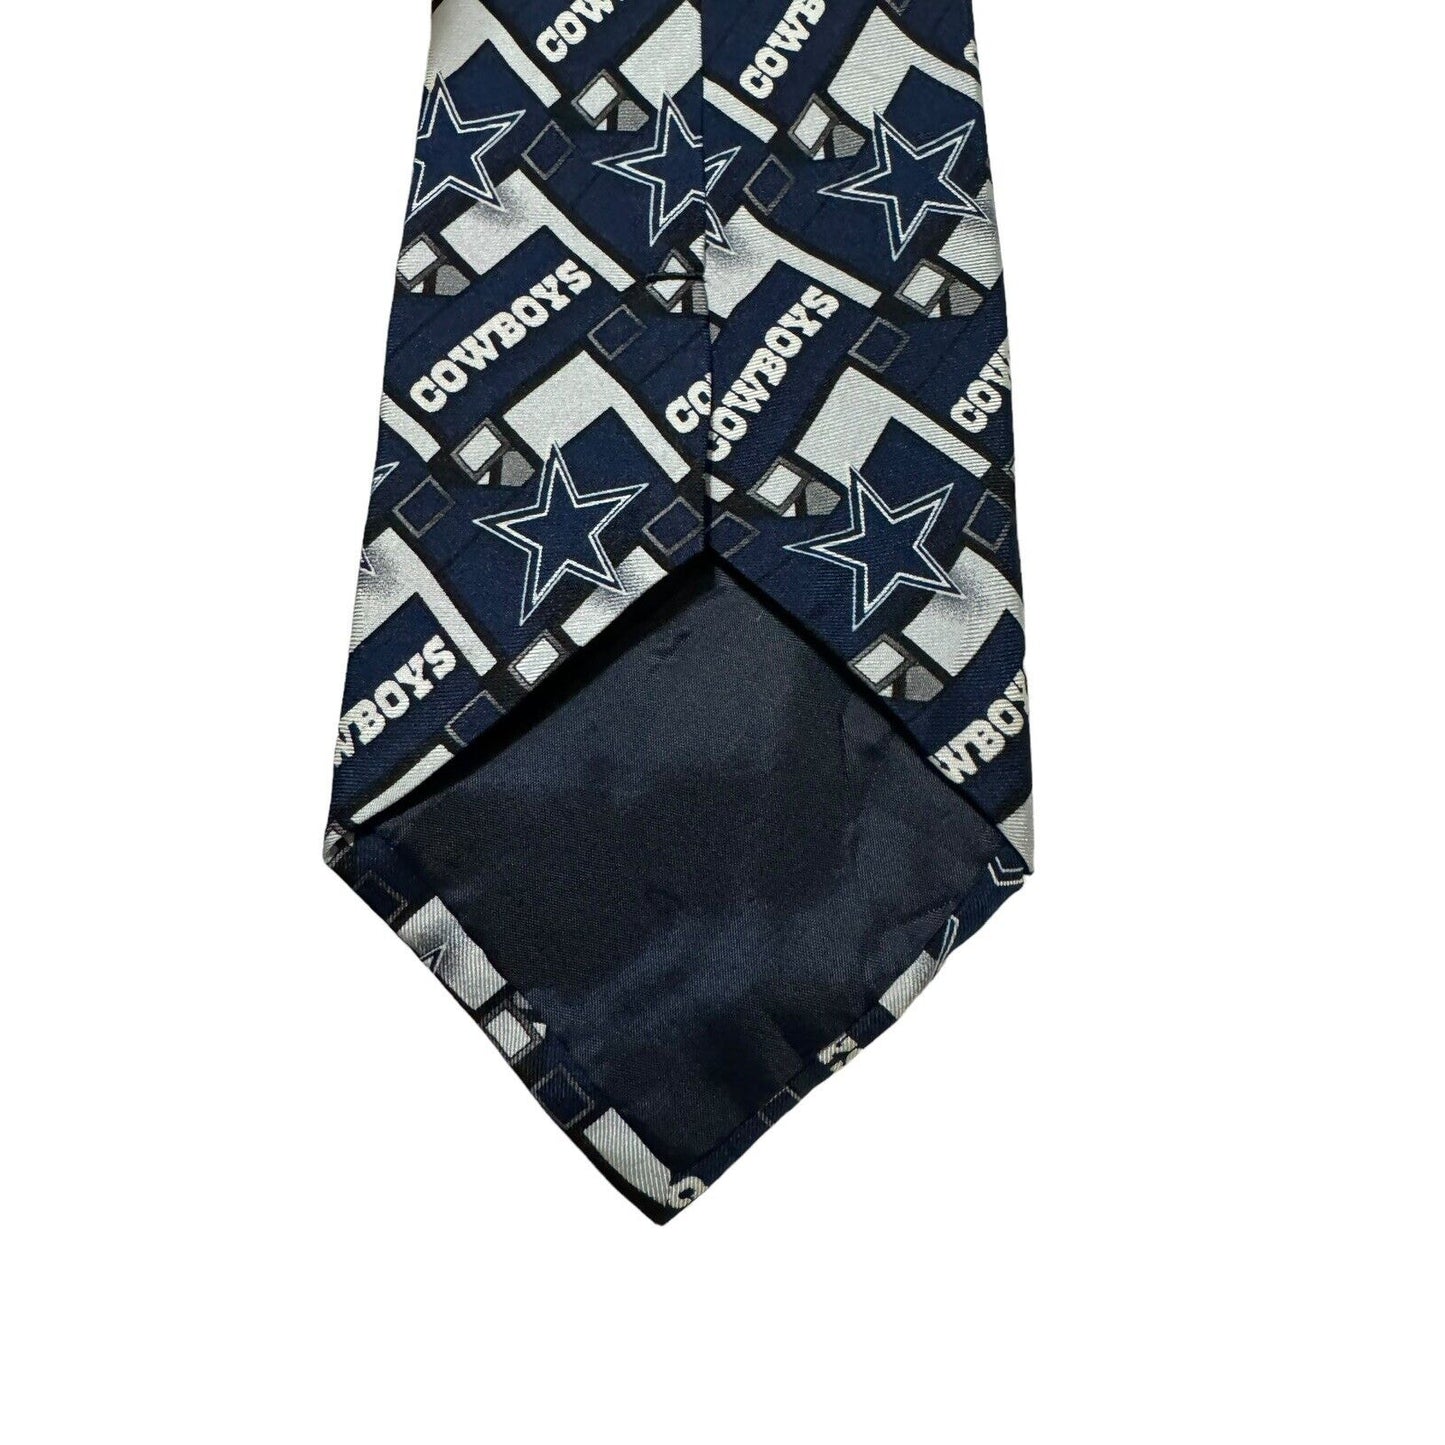 NFL Dallas Cowboys Logo Football Vintage Novelty Necktie Silk Blue White